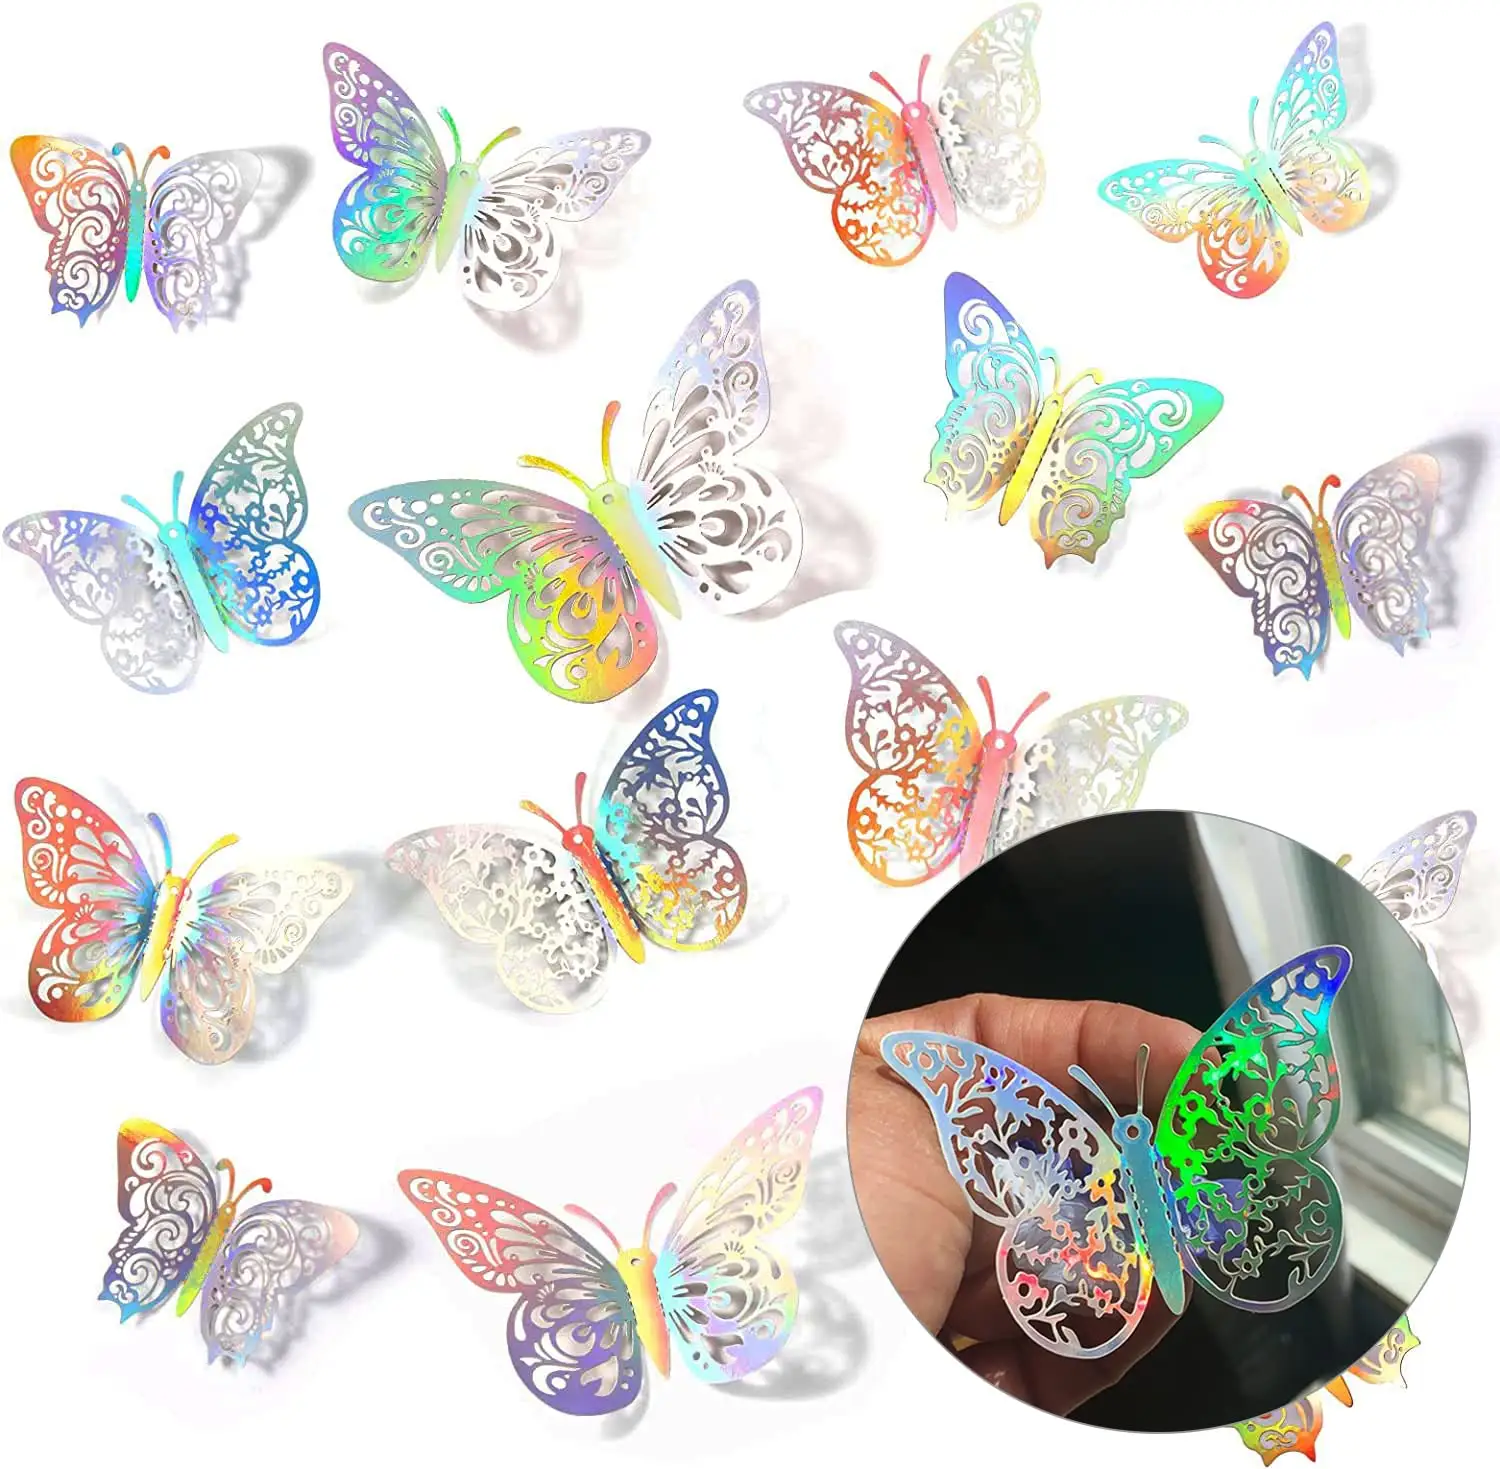 Regenbogen Silber 72 Stück Schmetterling Dekorationen 3 Größen 4 Styles3D Schmetterling Wand dekoration Schmetterling Party Kuchen Dekor Dekorationen X0151